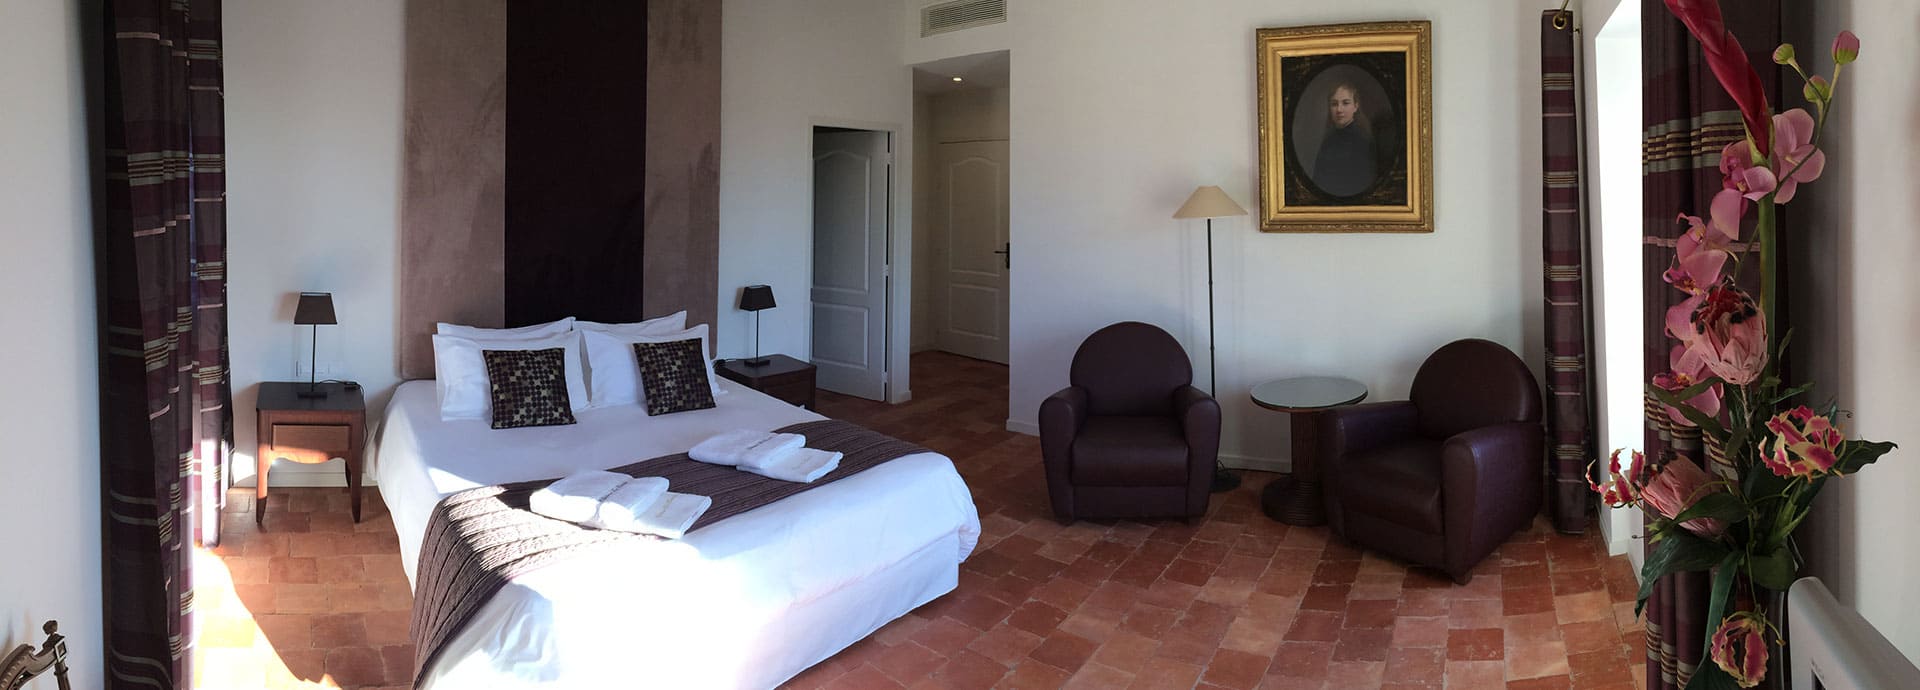 Luxury bedroom in Bacchus guesthouse in Domaine de la Vernède, holiday rental in Nissan-lez-Enserune